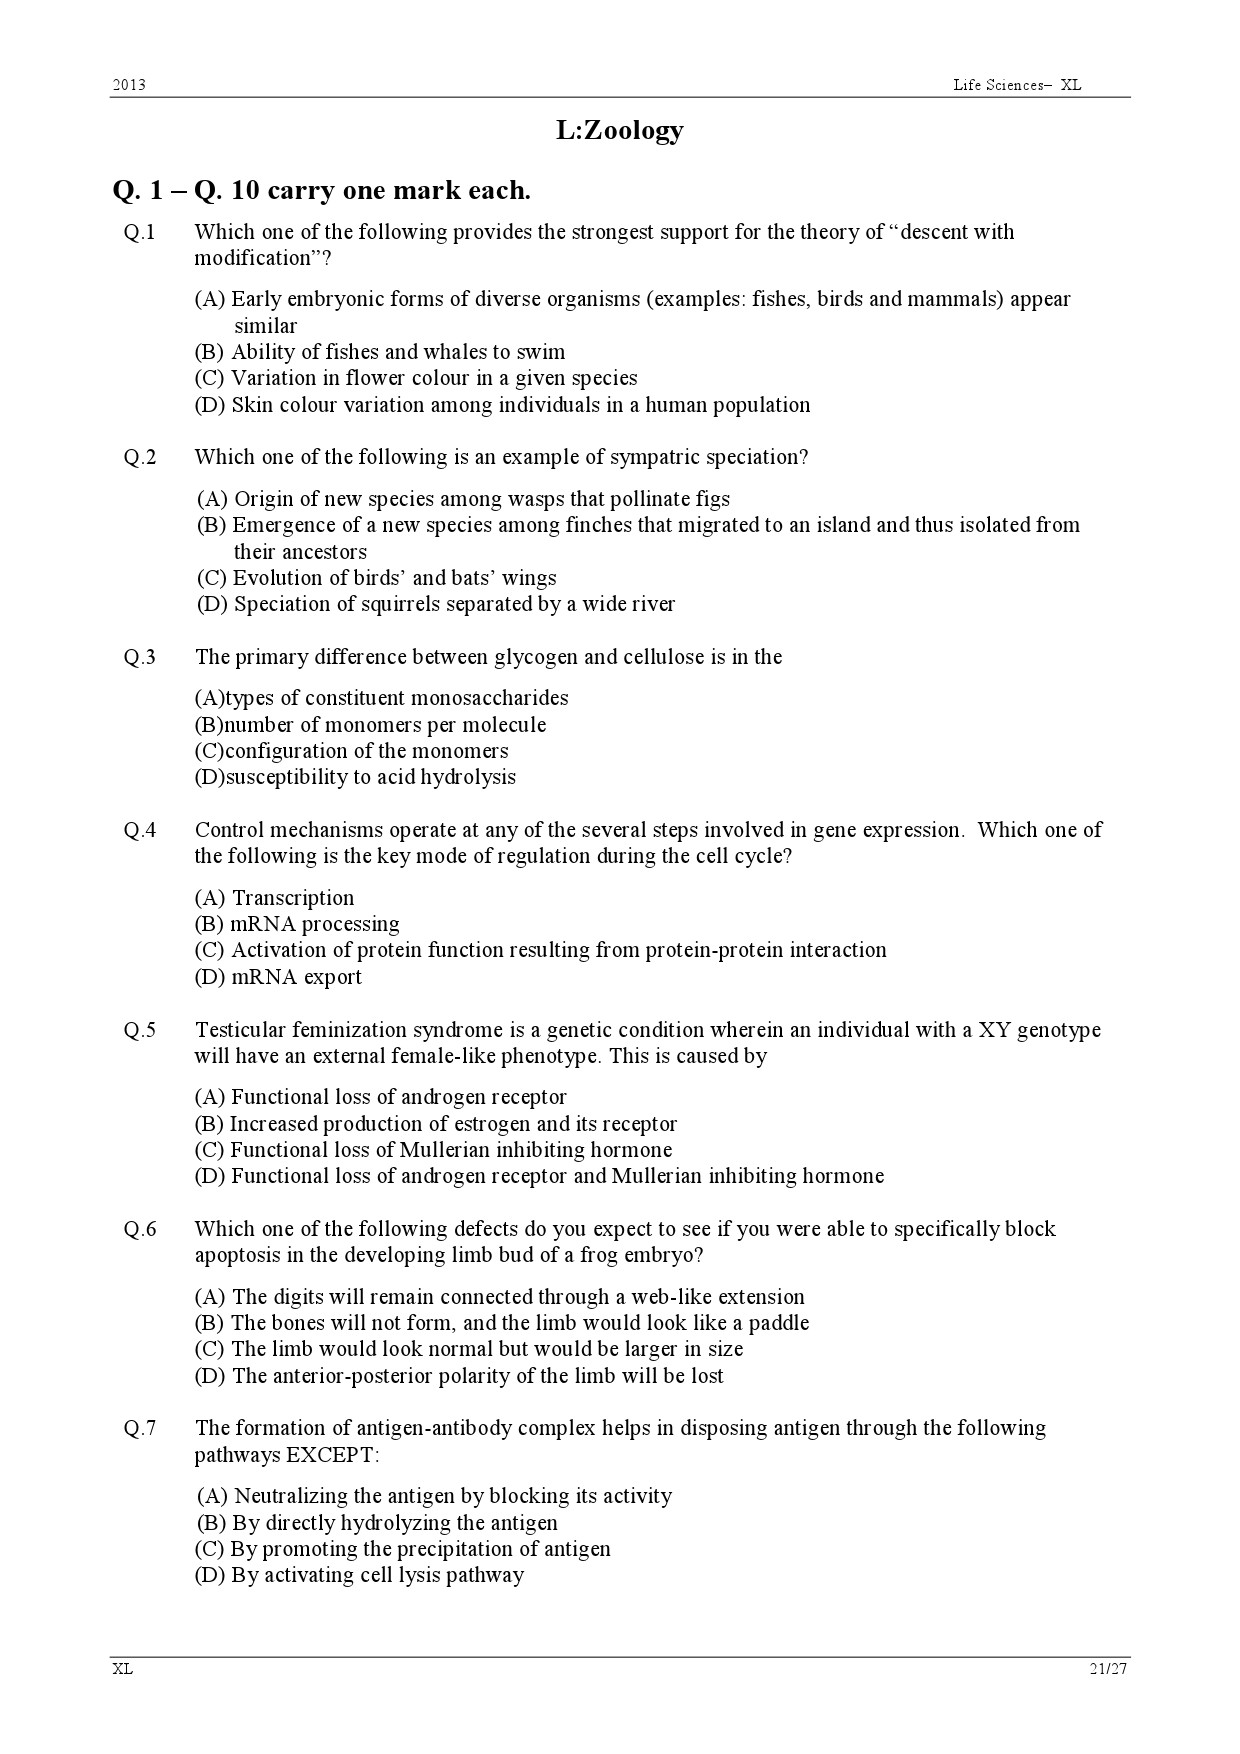 GATE Exam Question Paper 2013 Life Sciences 21